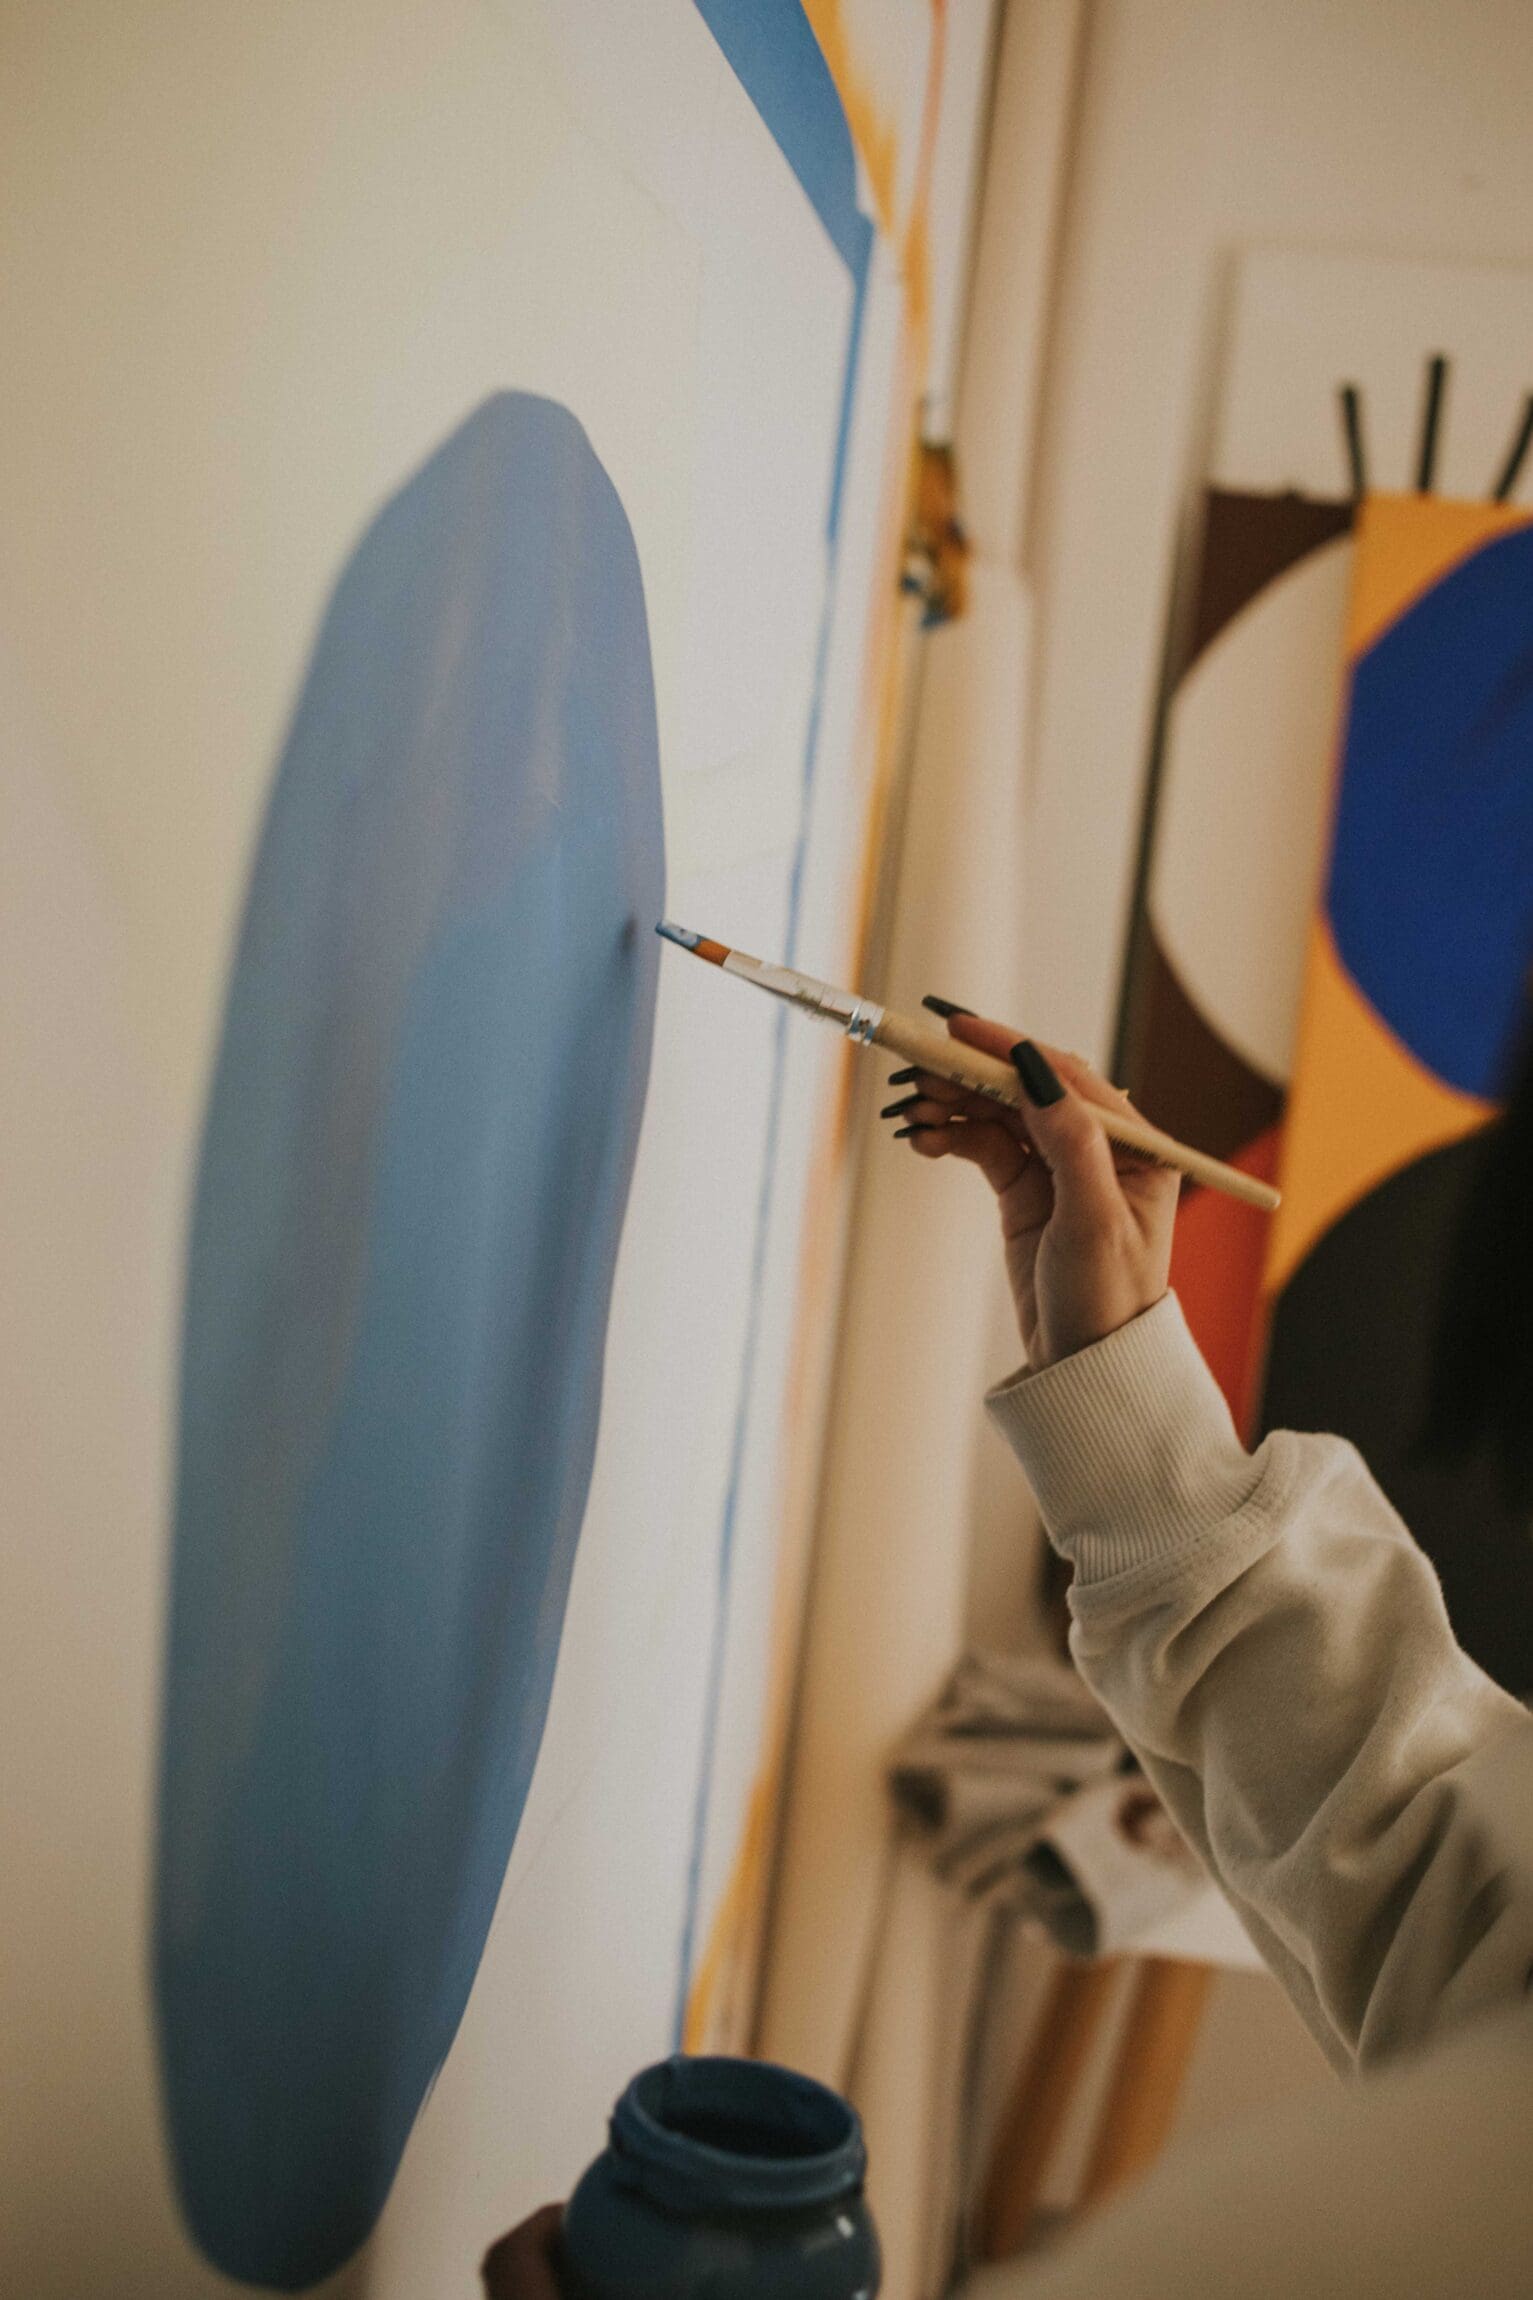 Artist Luisa Salas, aka Hola Lou, shot for ROADBOOK in her home studio, painting on canvas